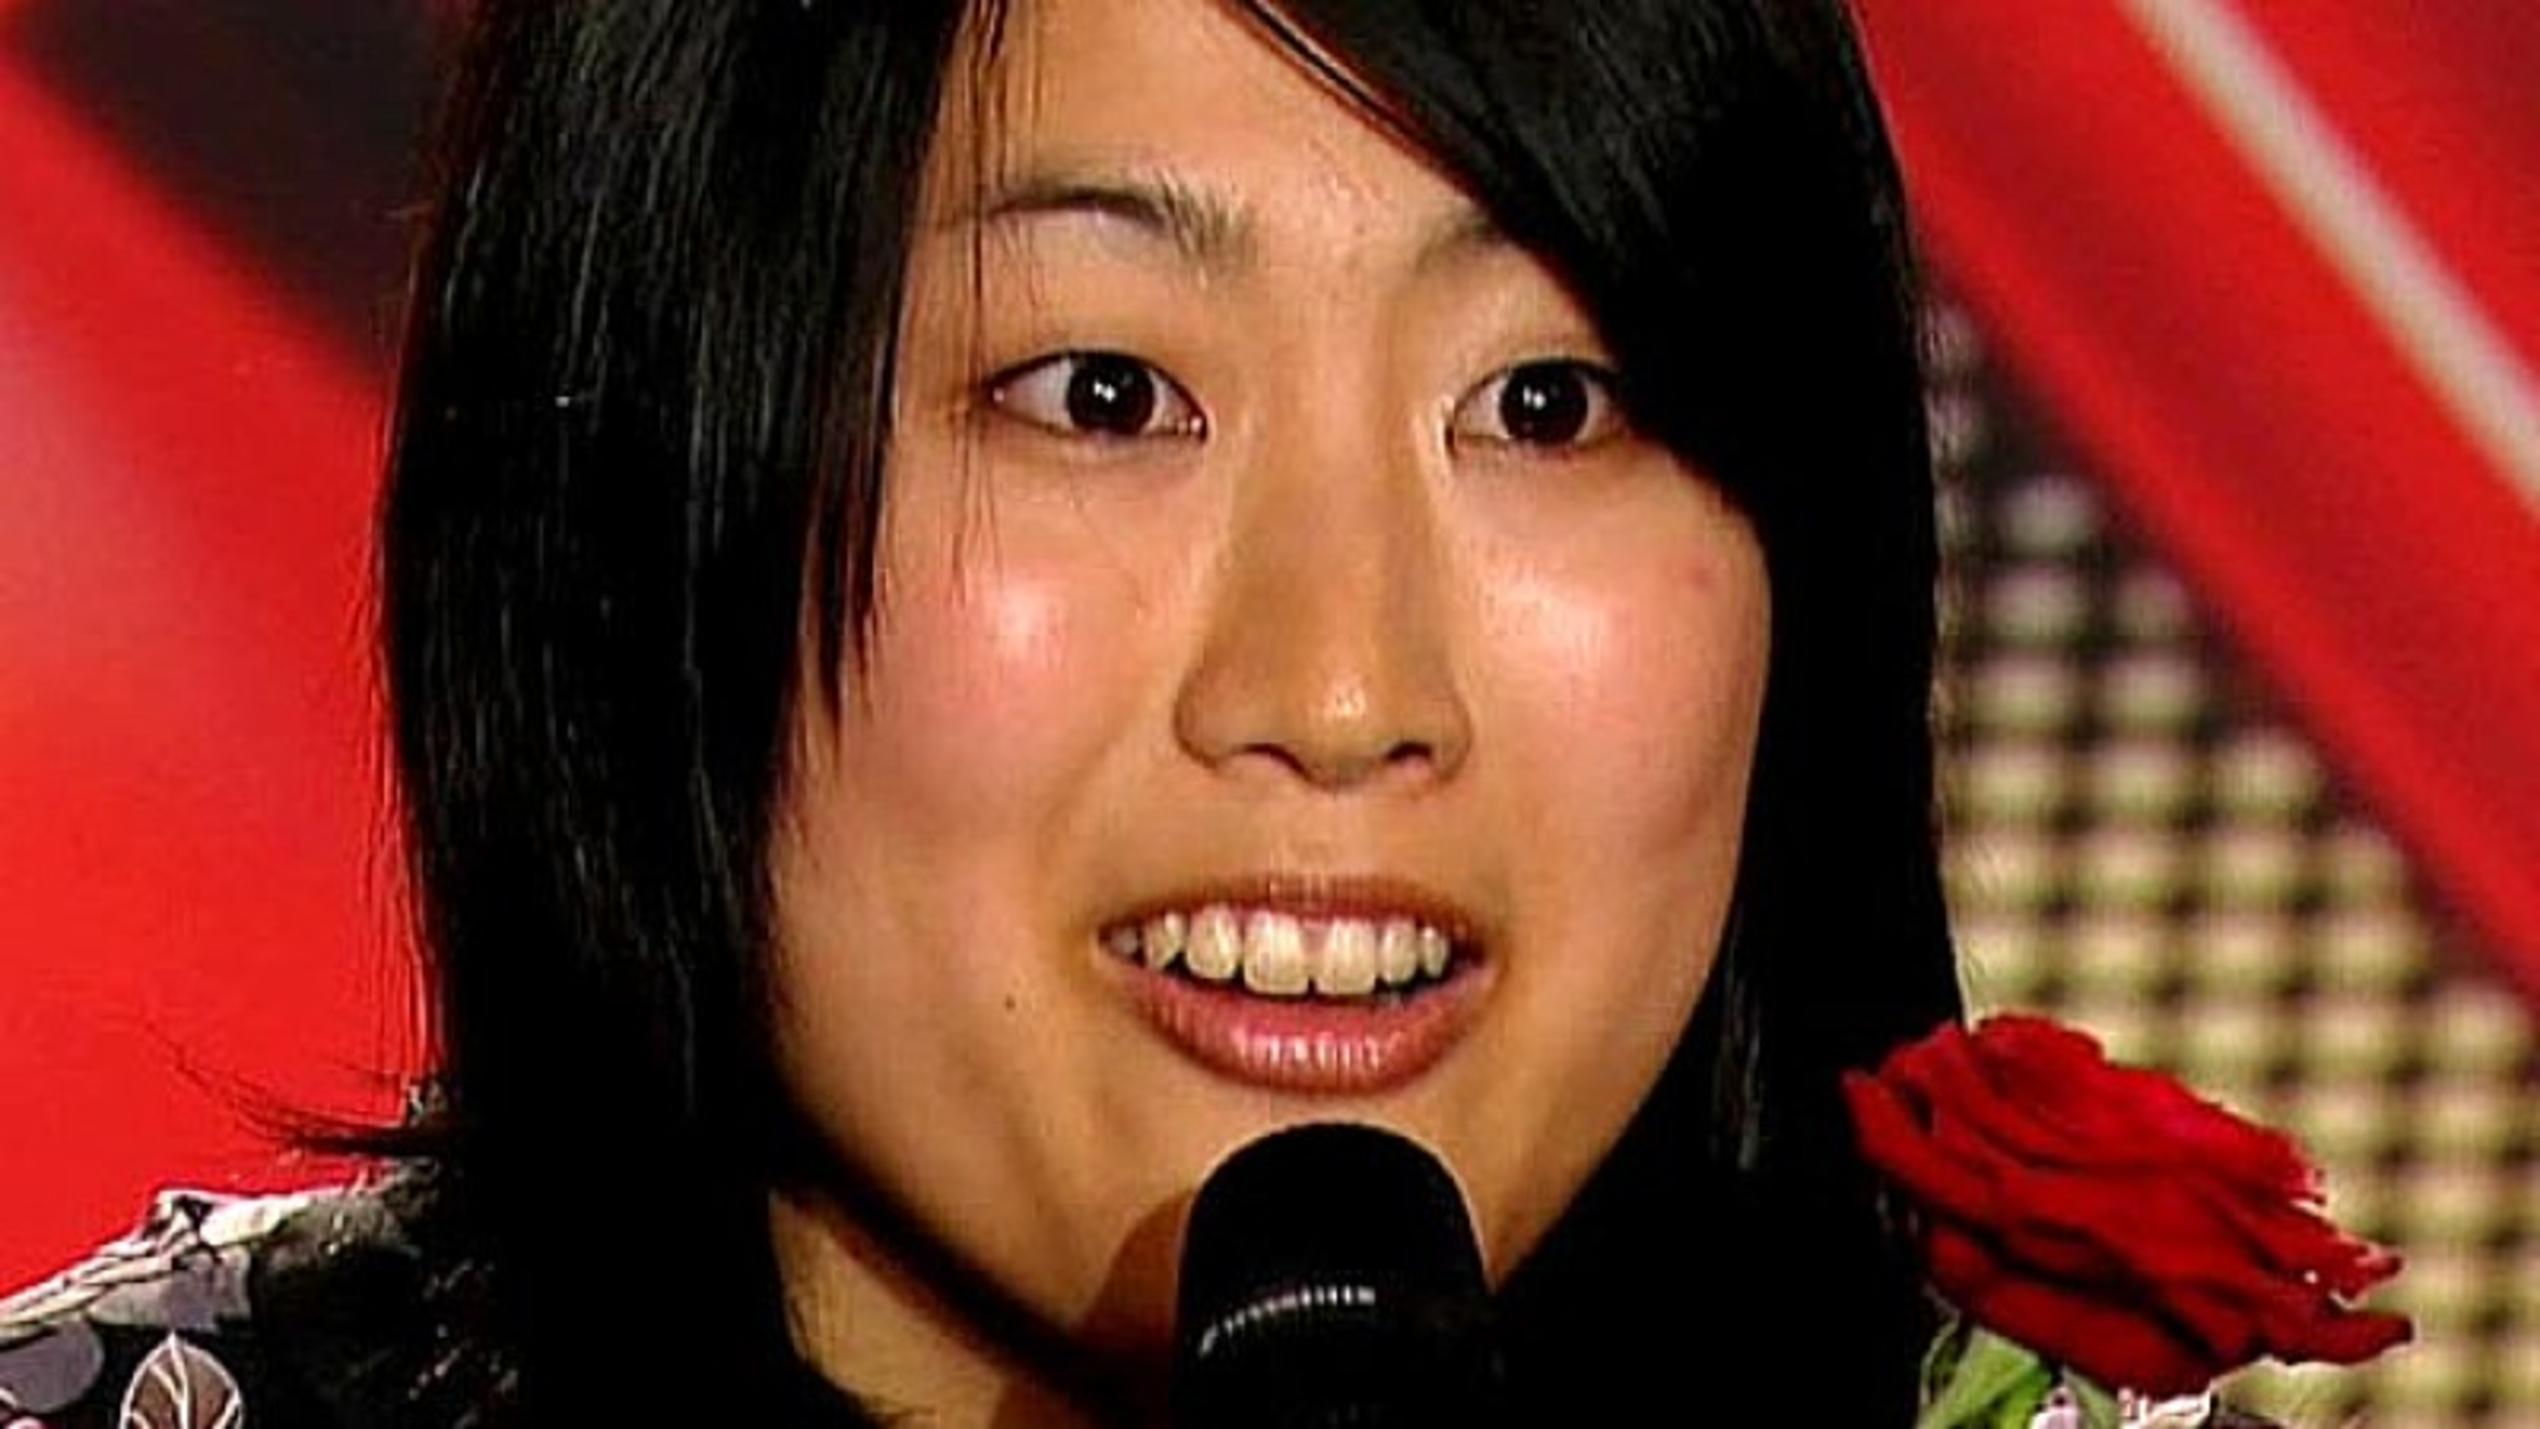 Natsumi Tanaka erobert das Herz von 'X Factor'-Juror Till Brönner